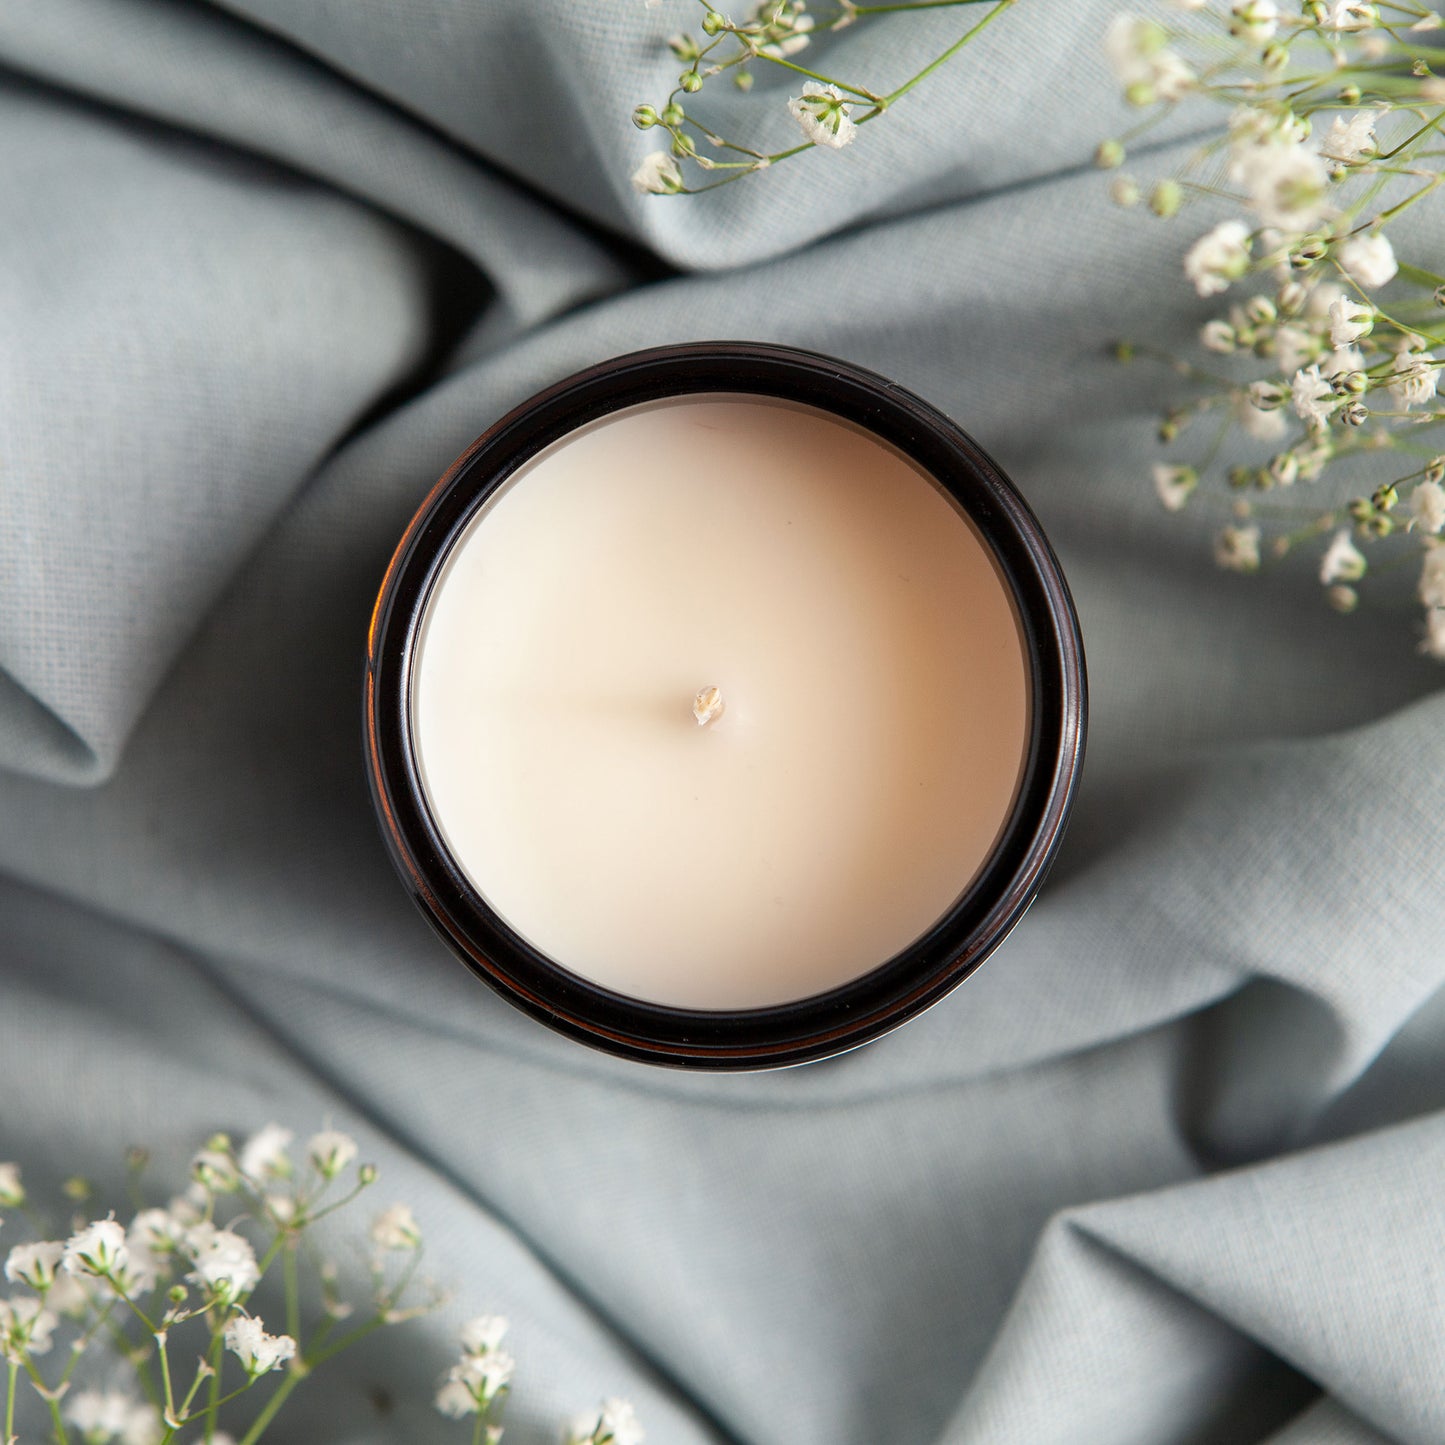 Calm & De-stress Aromatherapy Candles